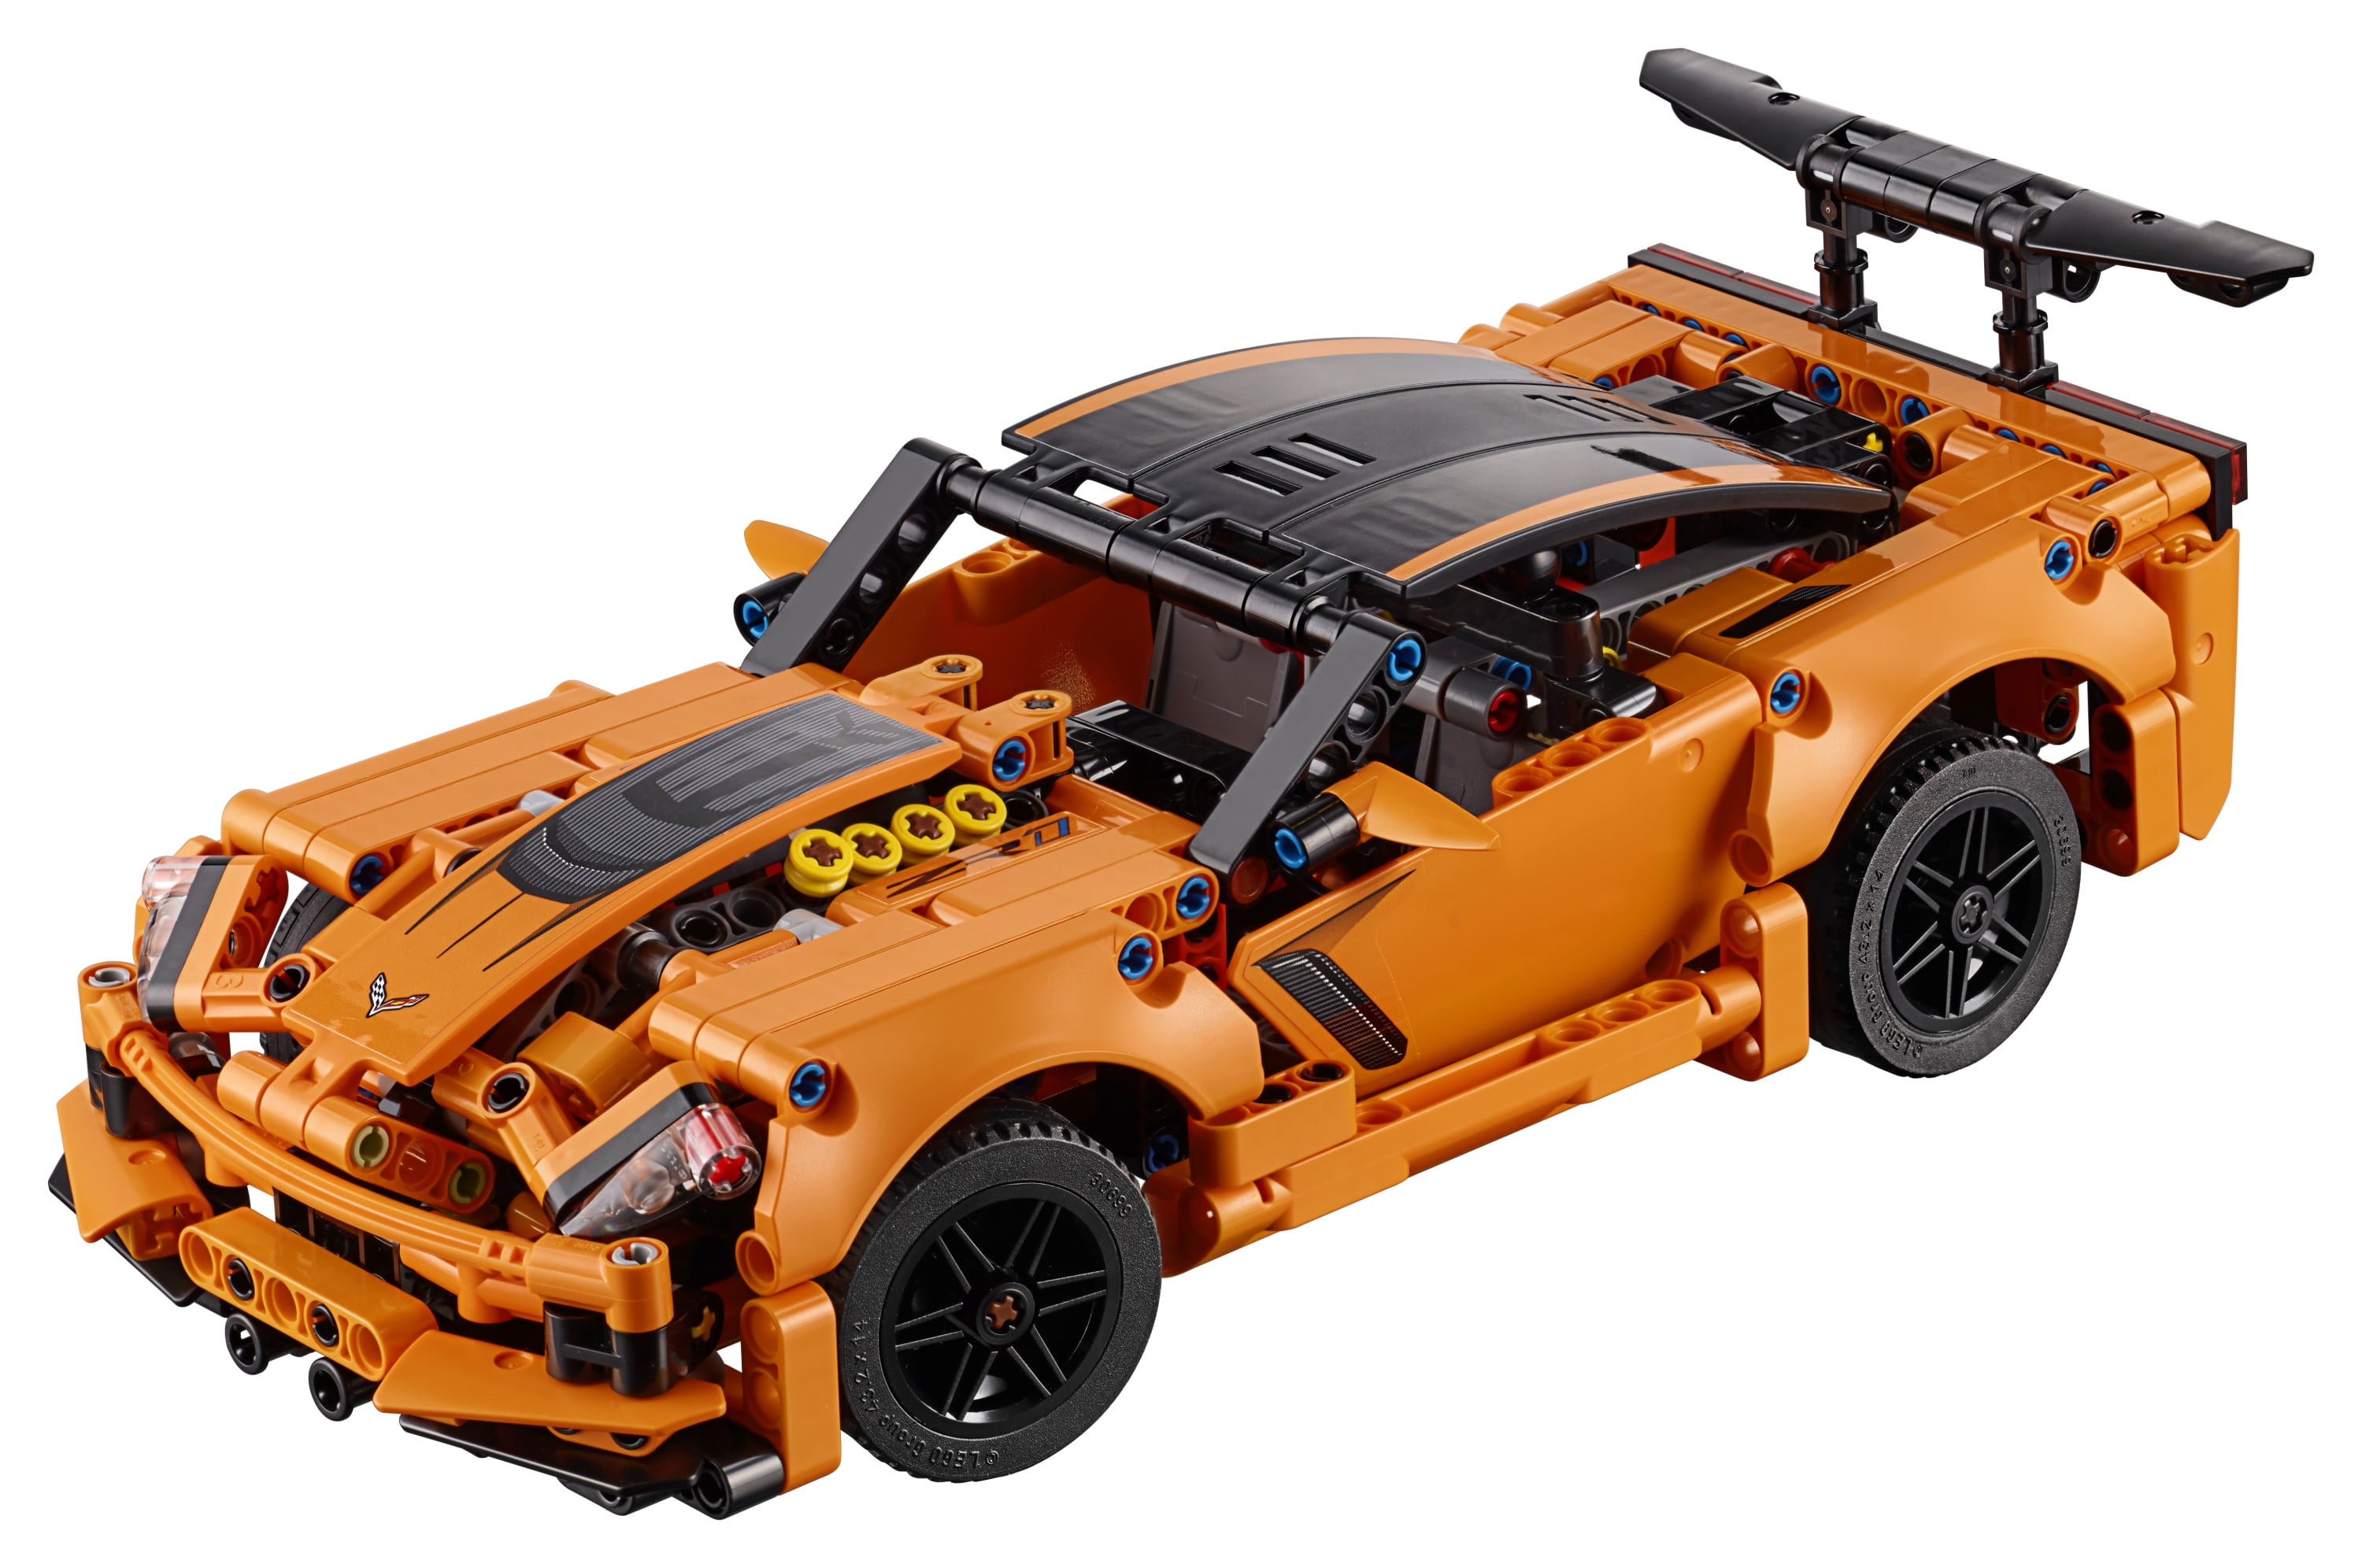 LEGO Technic Chevrolet Corvette ZR1 42093 Model Car Building